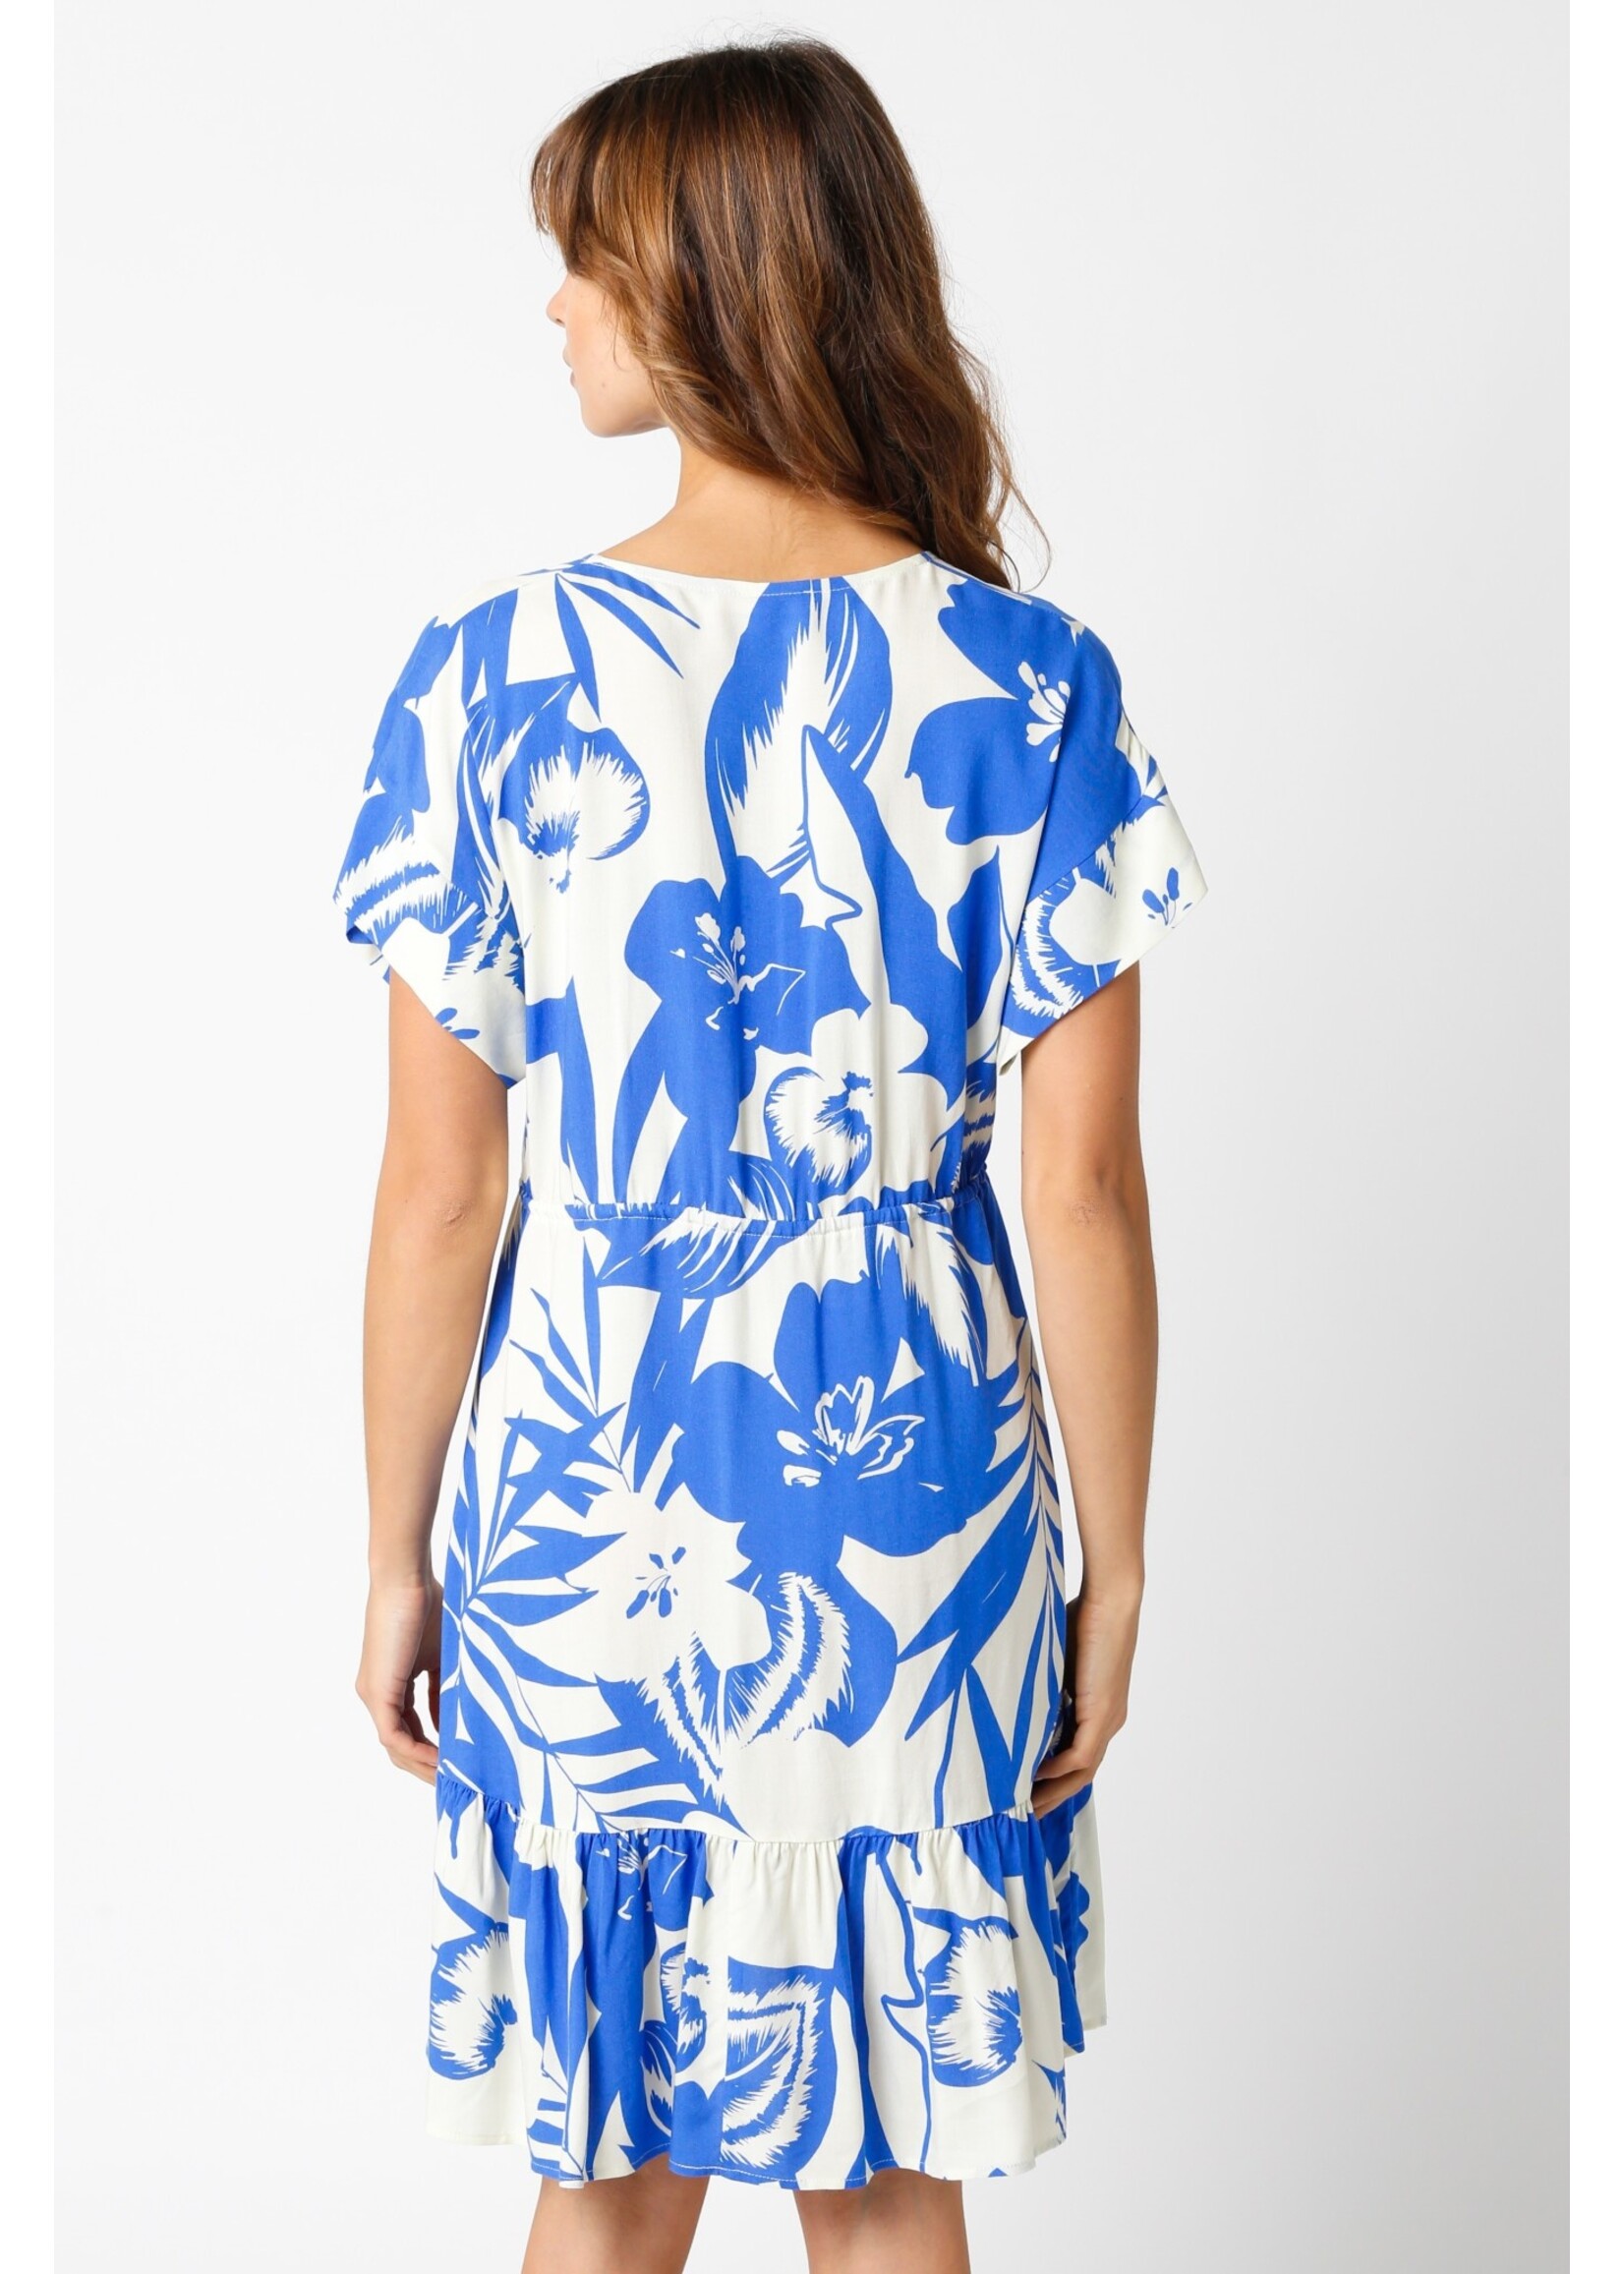 olivaceous O Blue Floral Dress